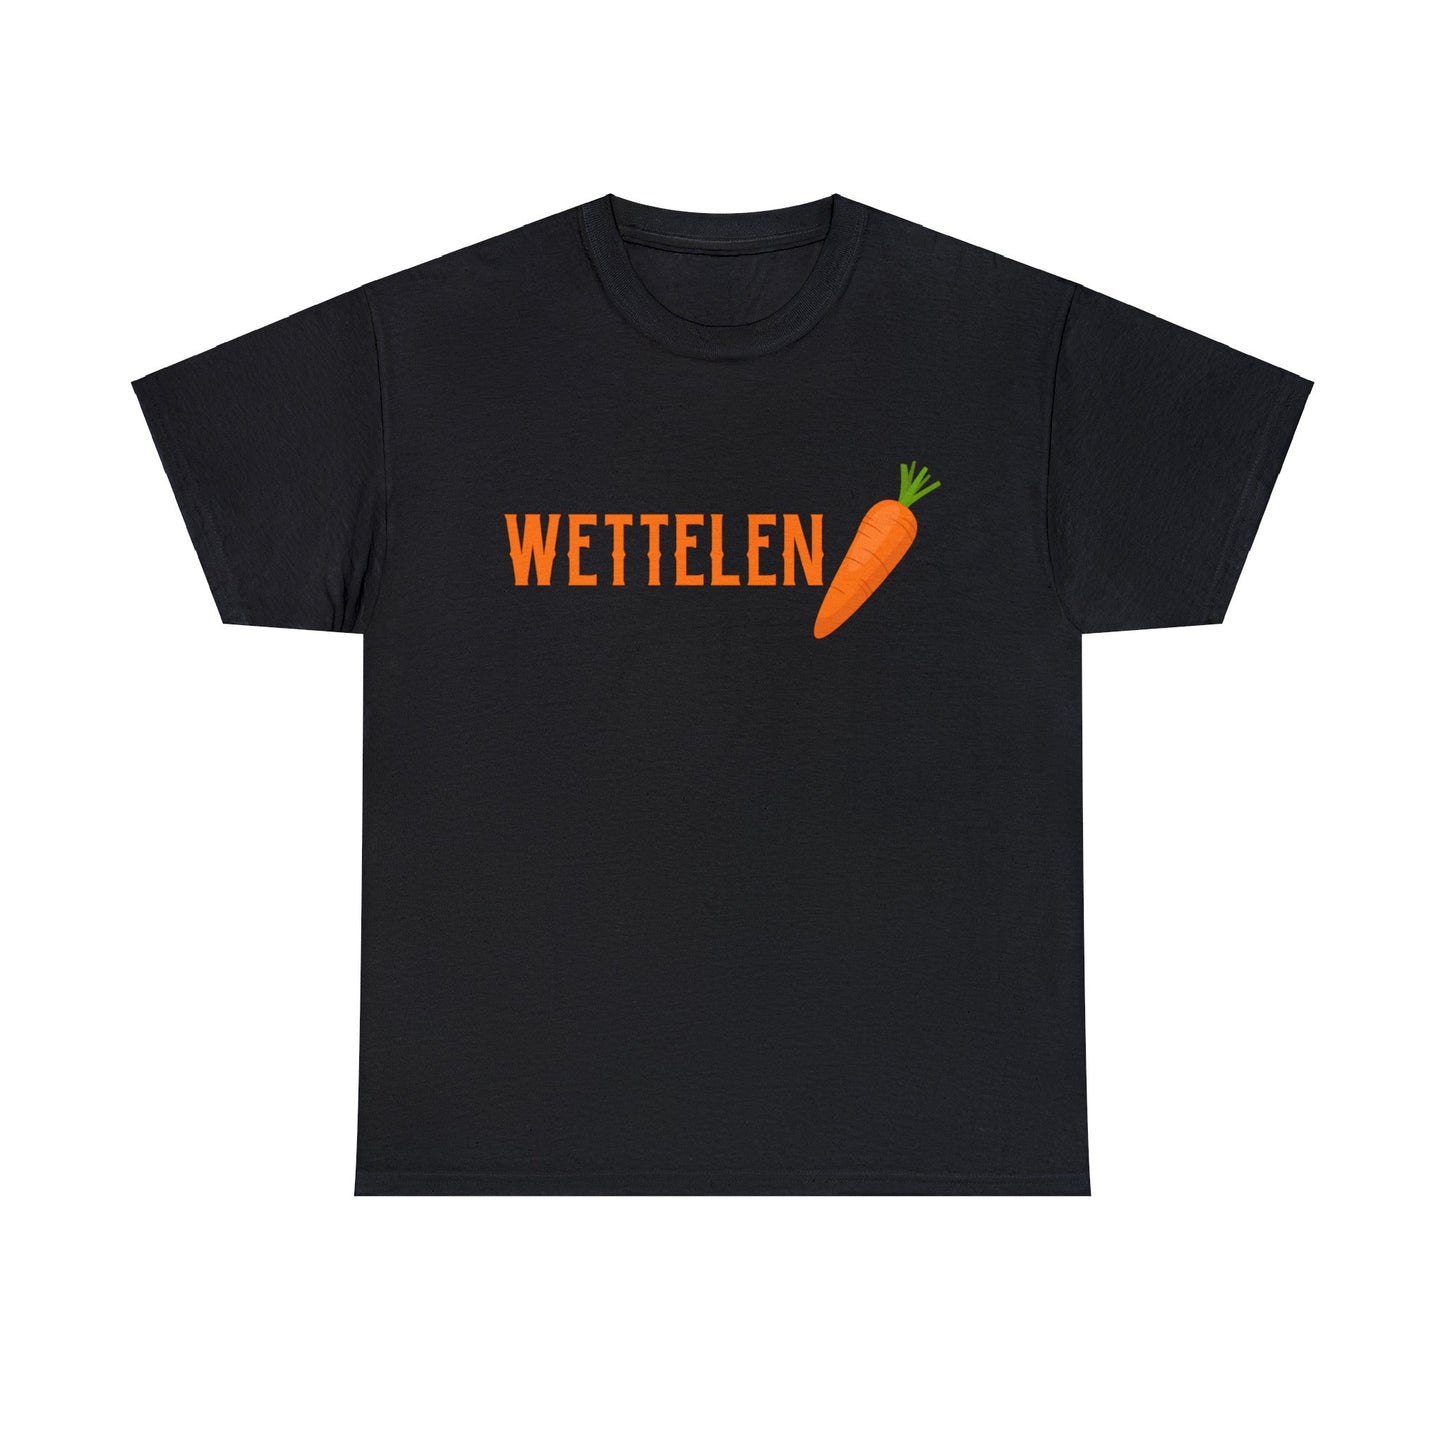 Int Oilsjters - Tshirt - Wettelen